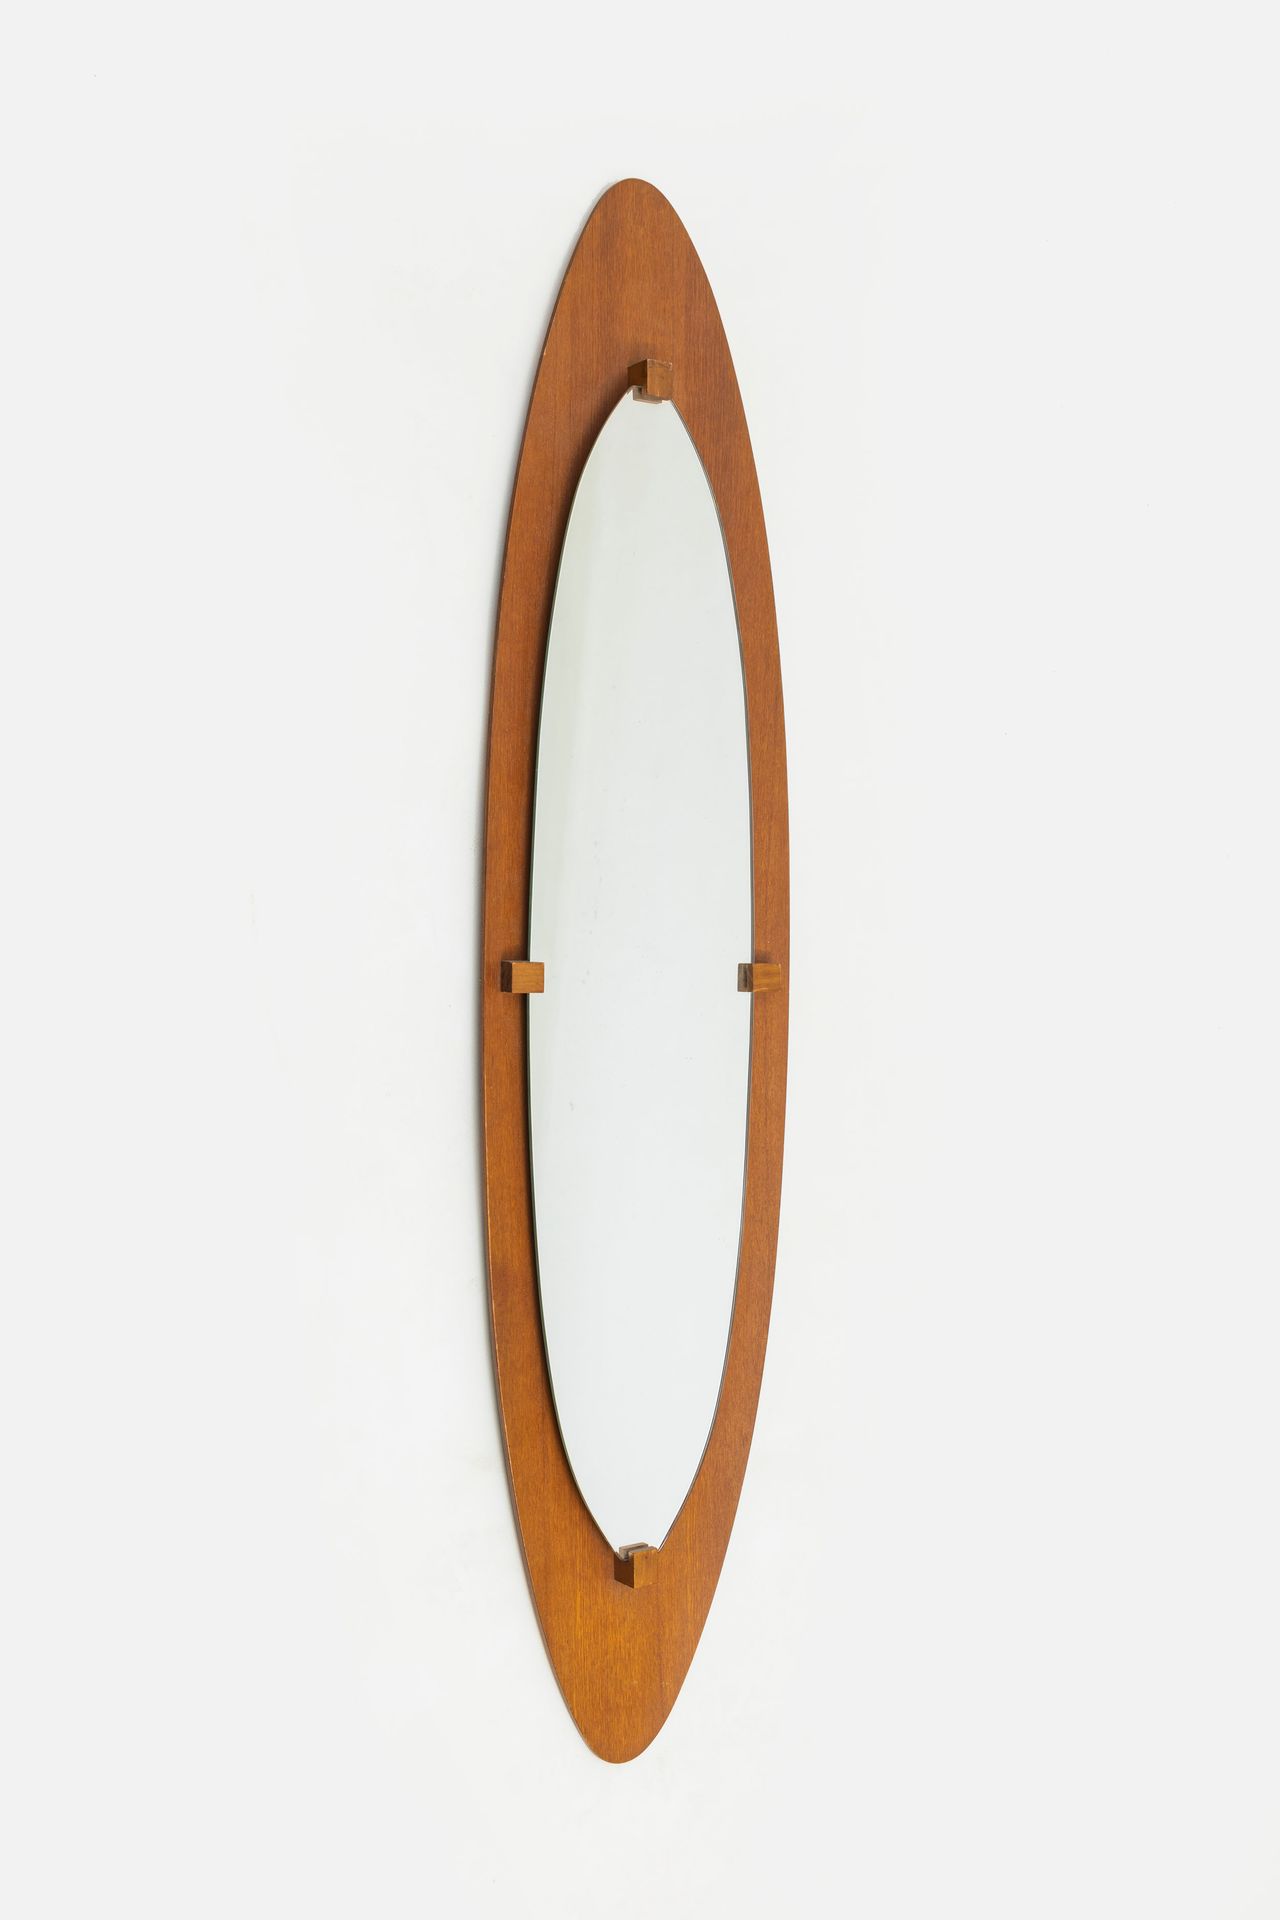 FRANCO CAMPO, CARLO GRAFFI Mirror. Curved plywood veneered with teak wood, mirro&hellip;